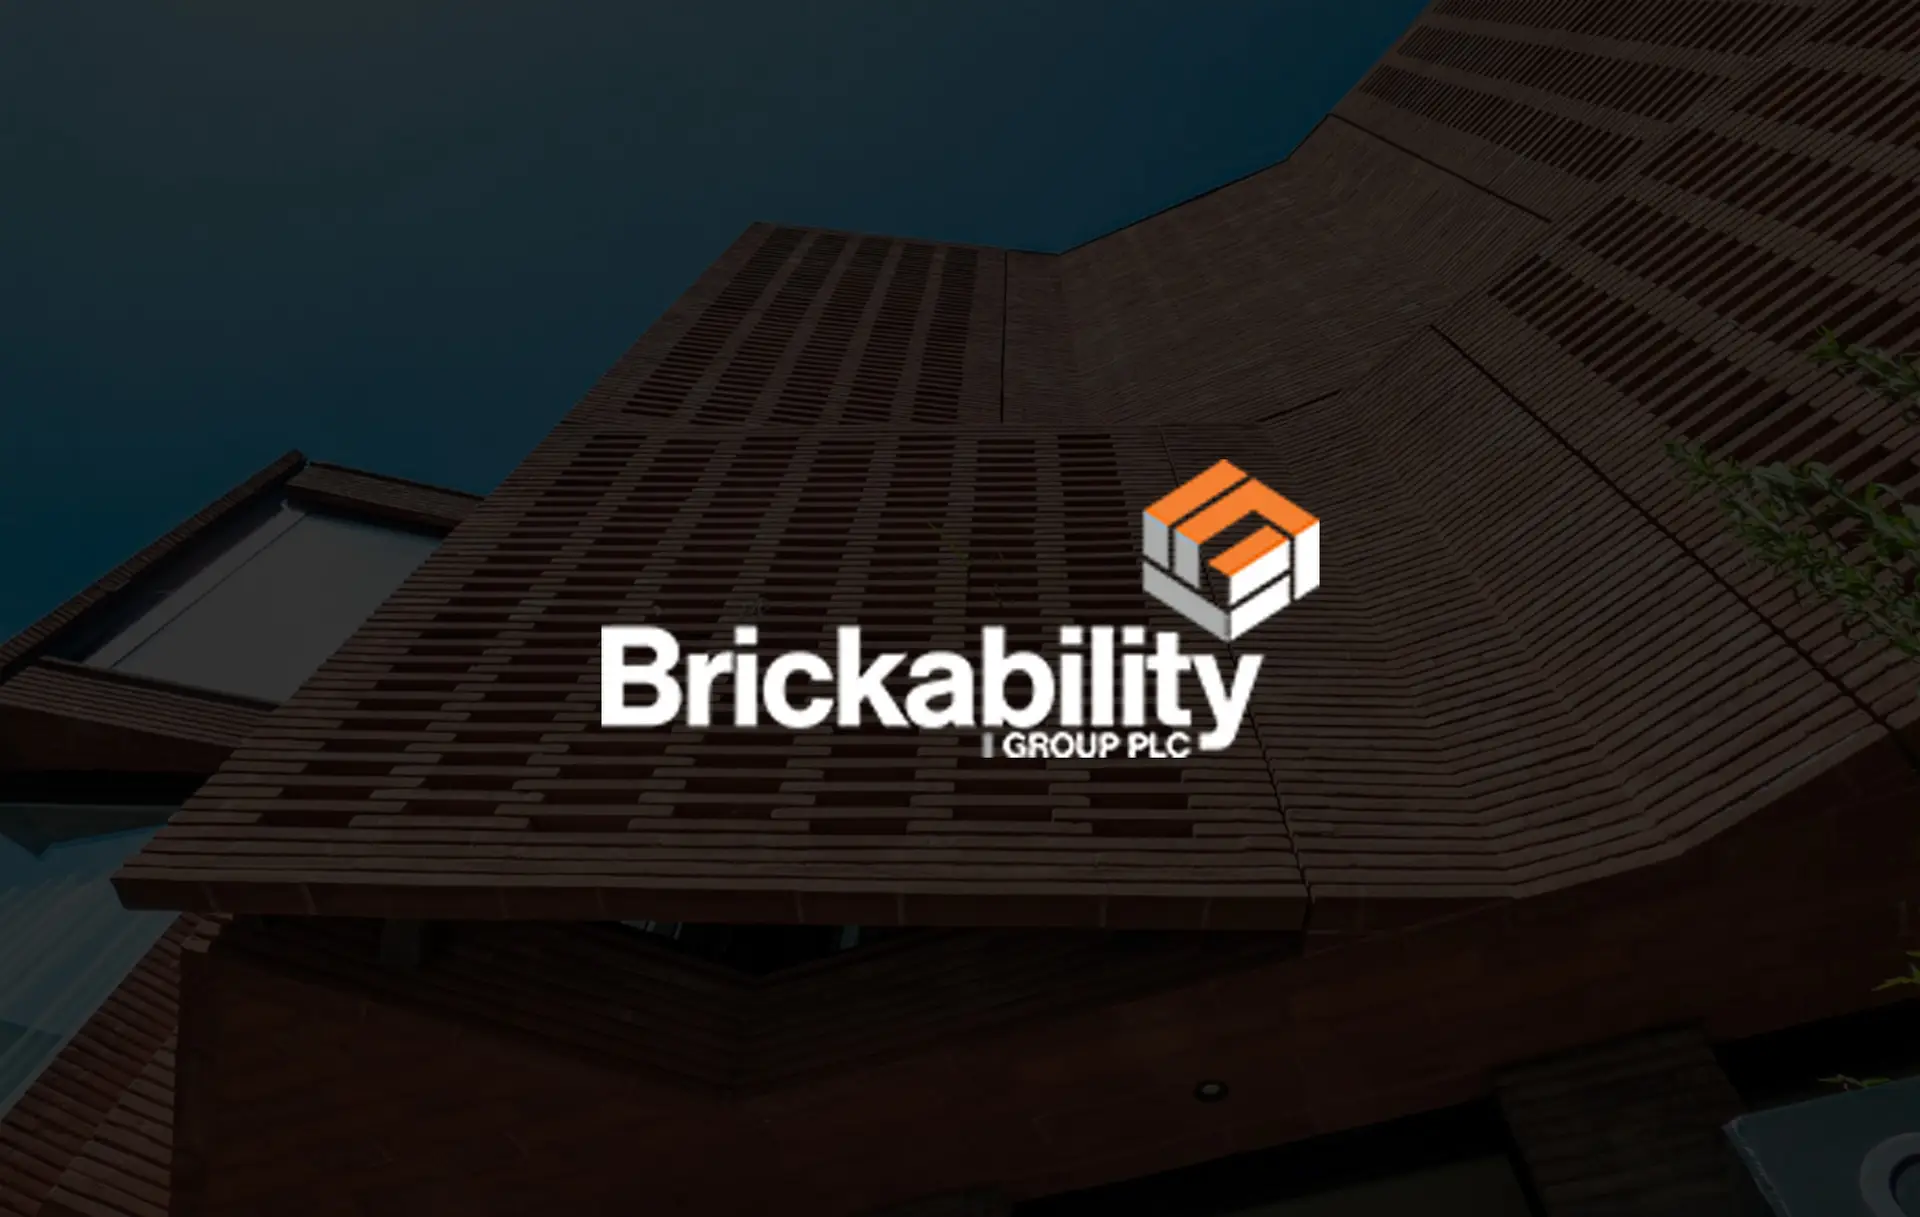 Brick-ability Group